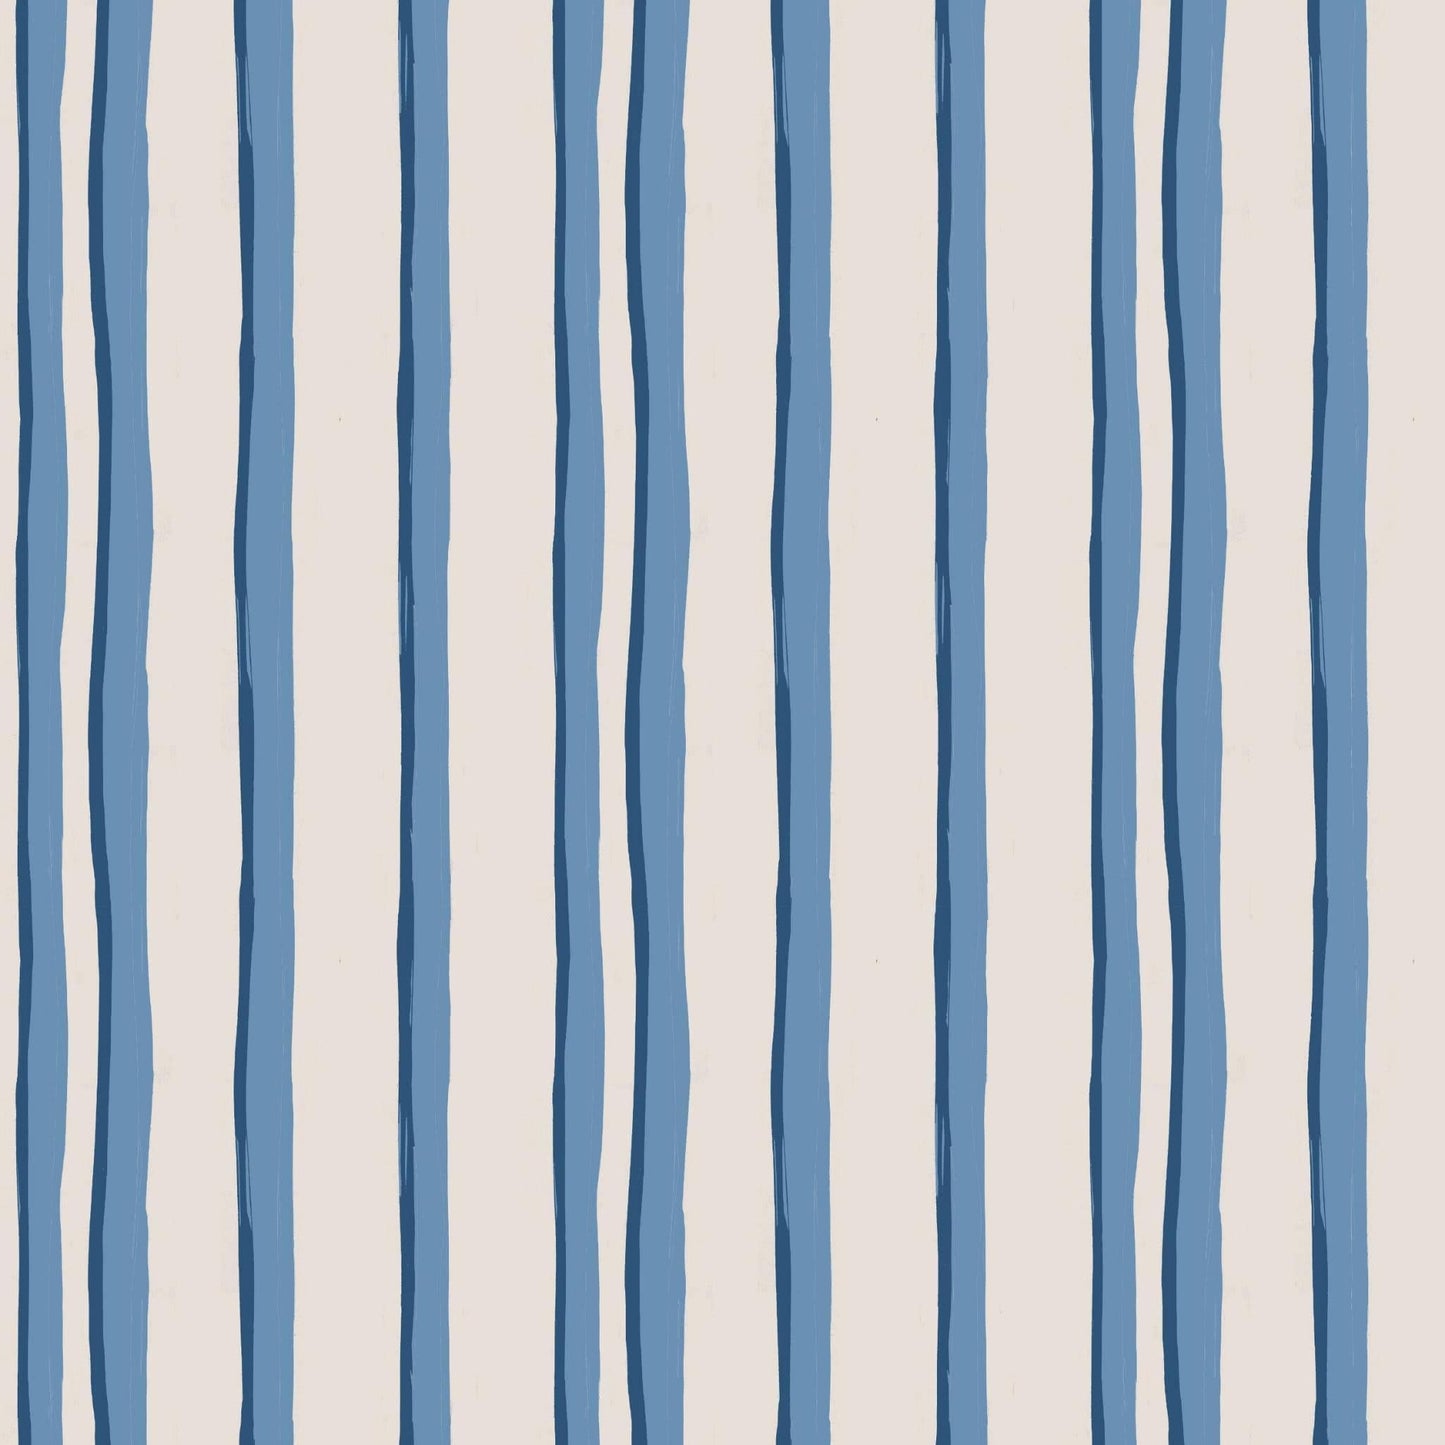 44 Blue and White Striped Wallpaper  WallpaperSafari